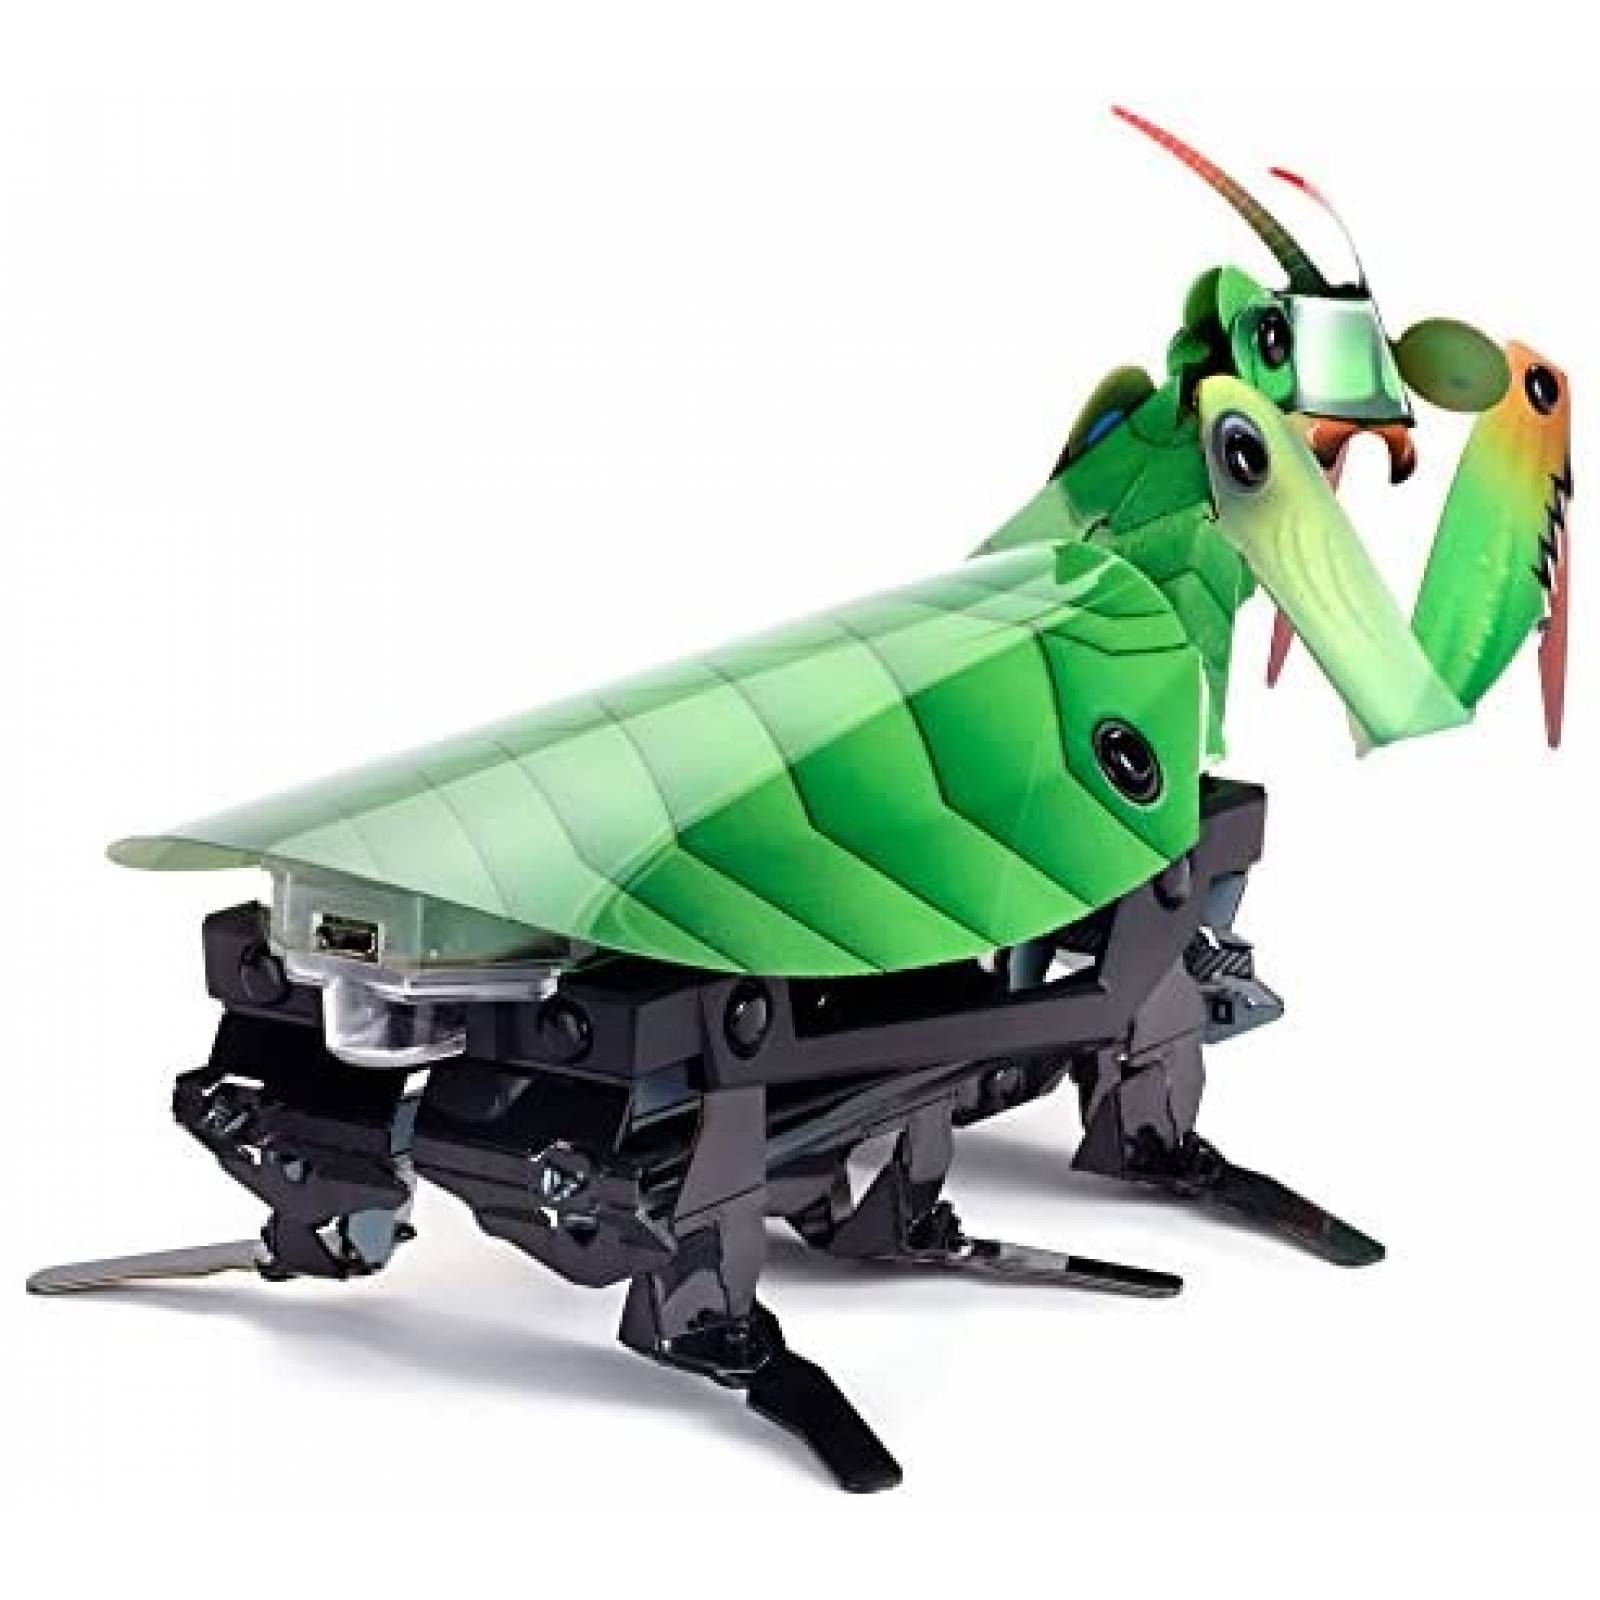 Robot Kamigami Mantix Plástico Plegable Luces Sonidos -Verde